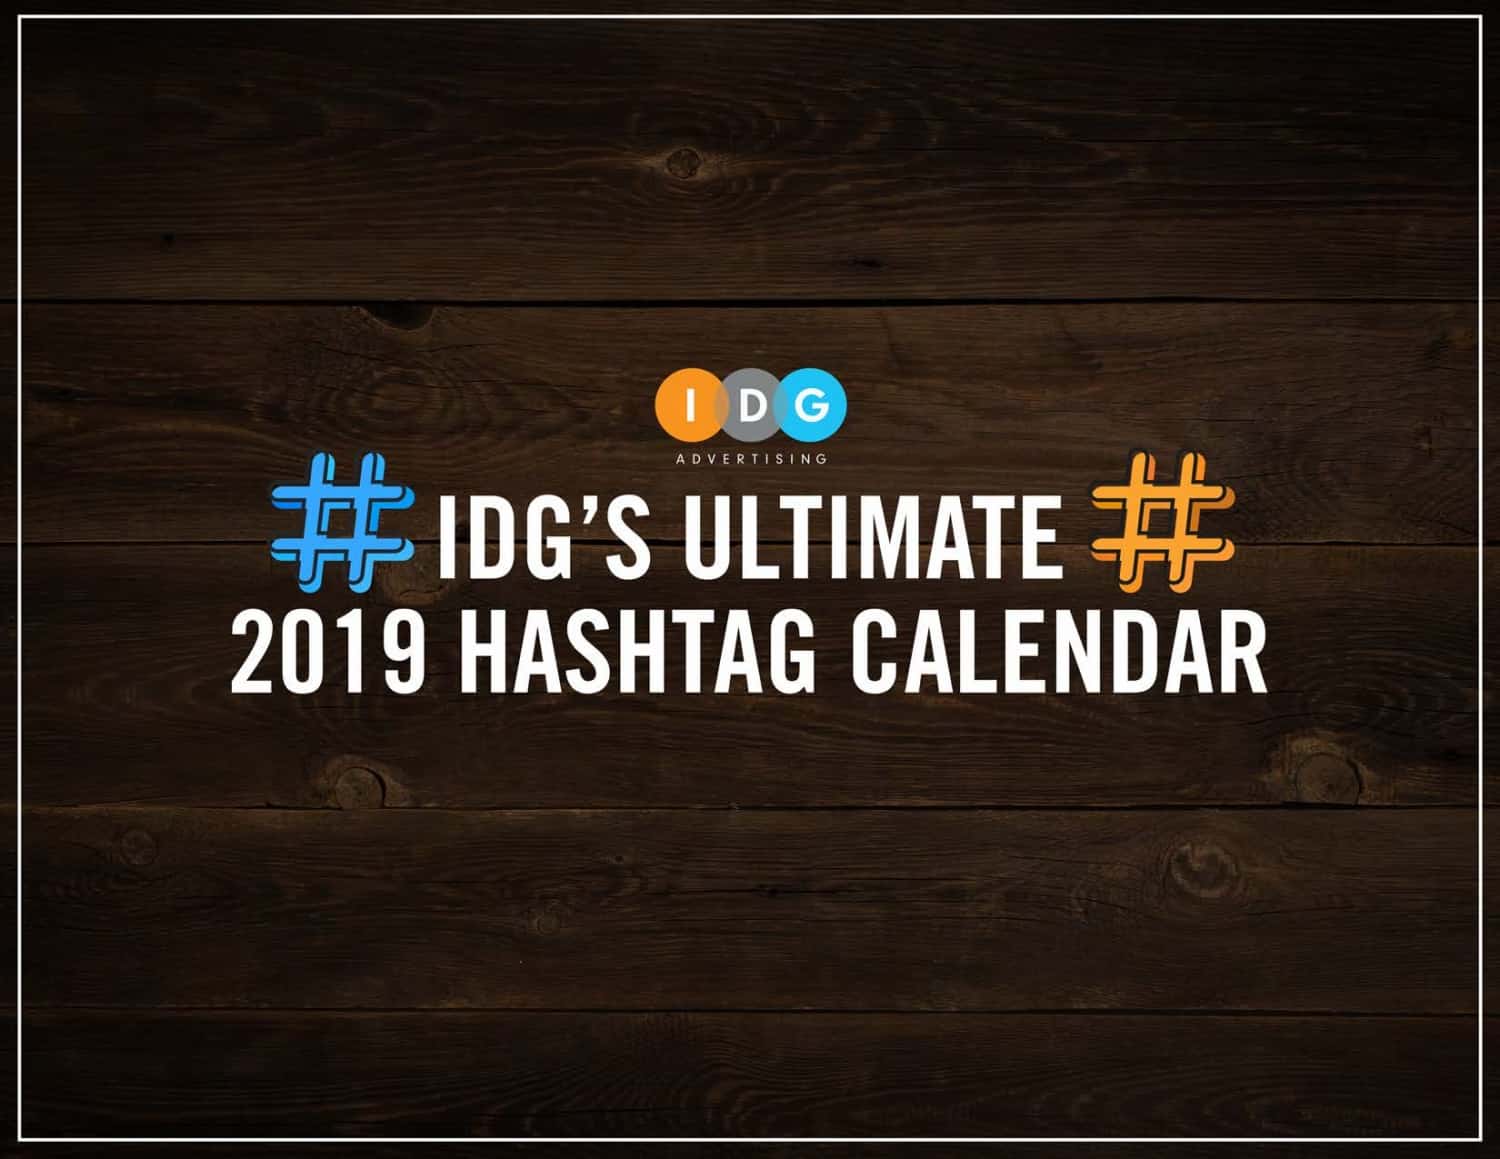 IDG’s Ultimate 2019 Hashtag Holiday Calendar